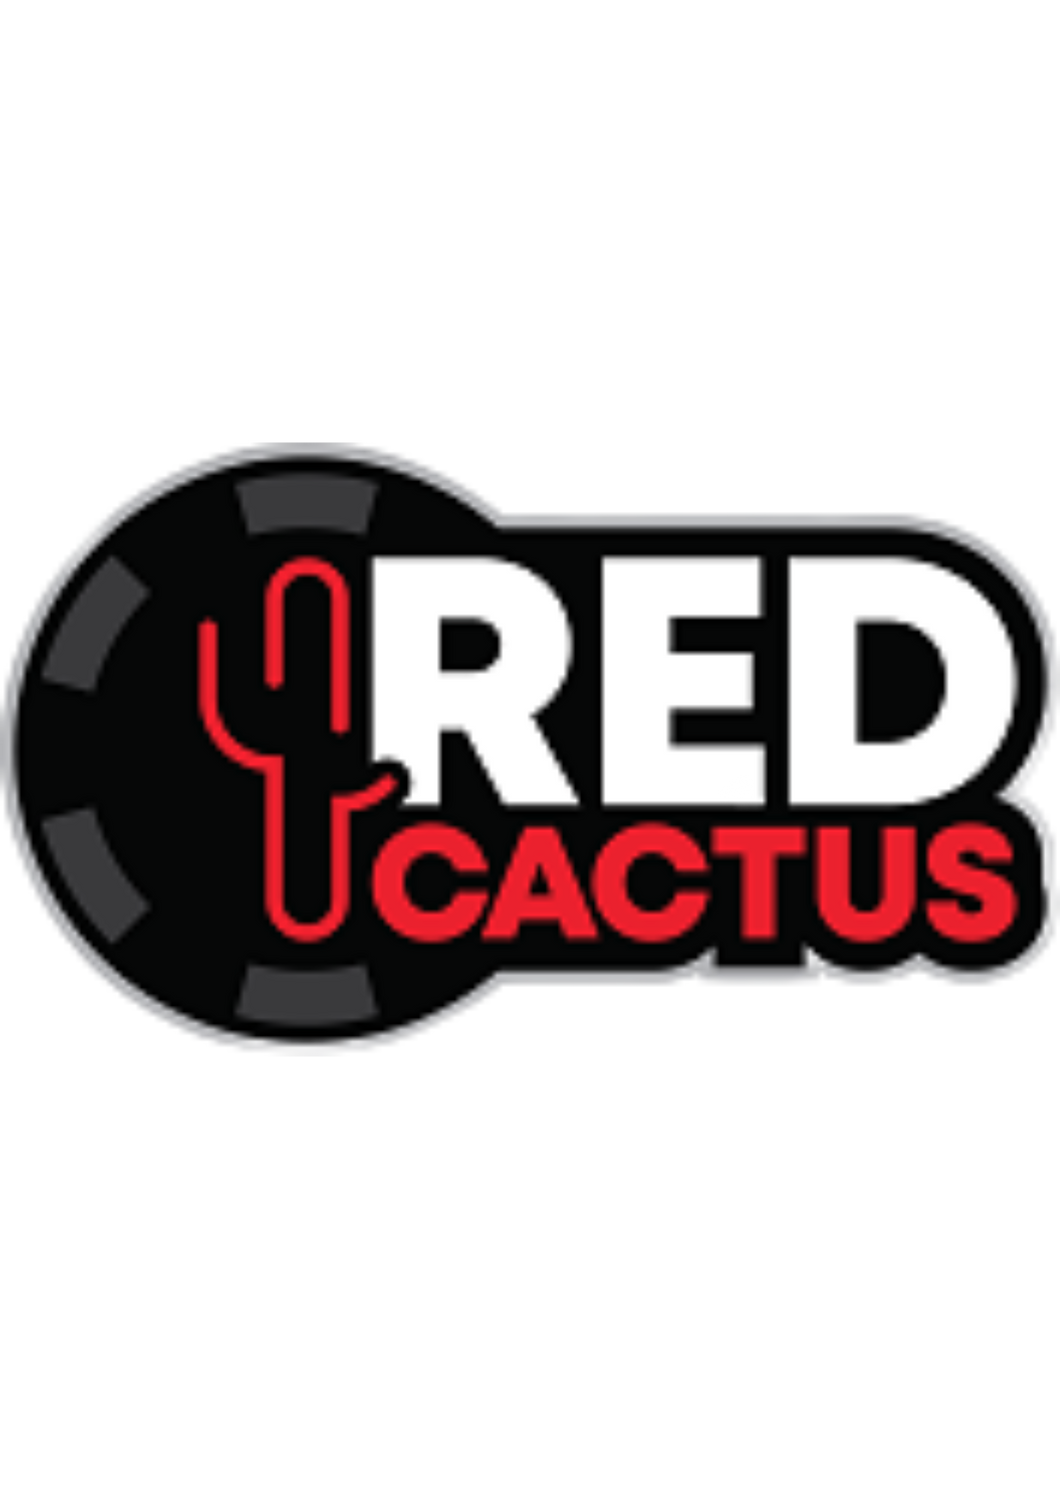 Sticker patch autocollant RedCactus